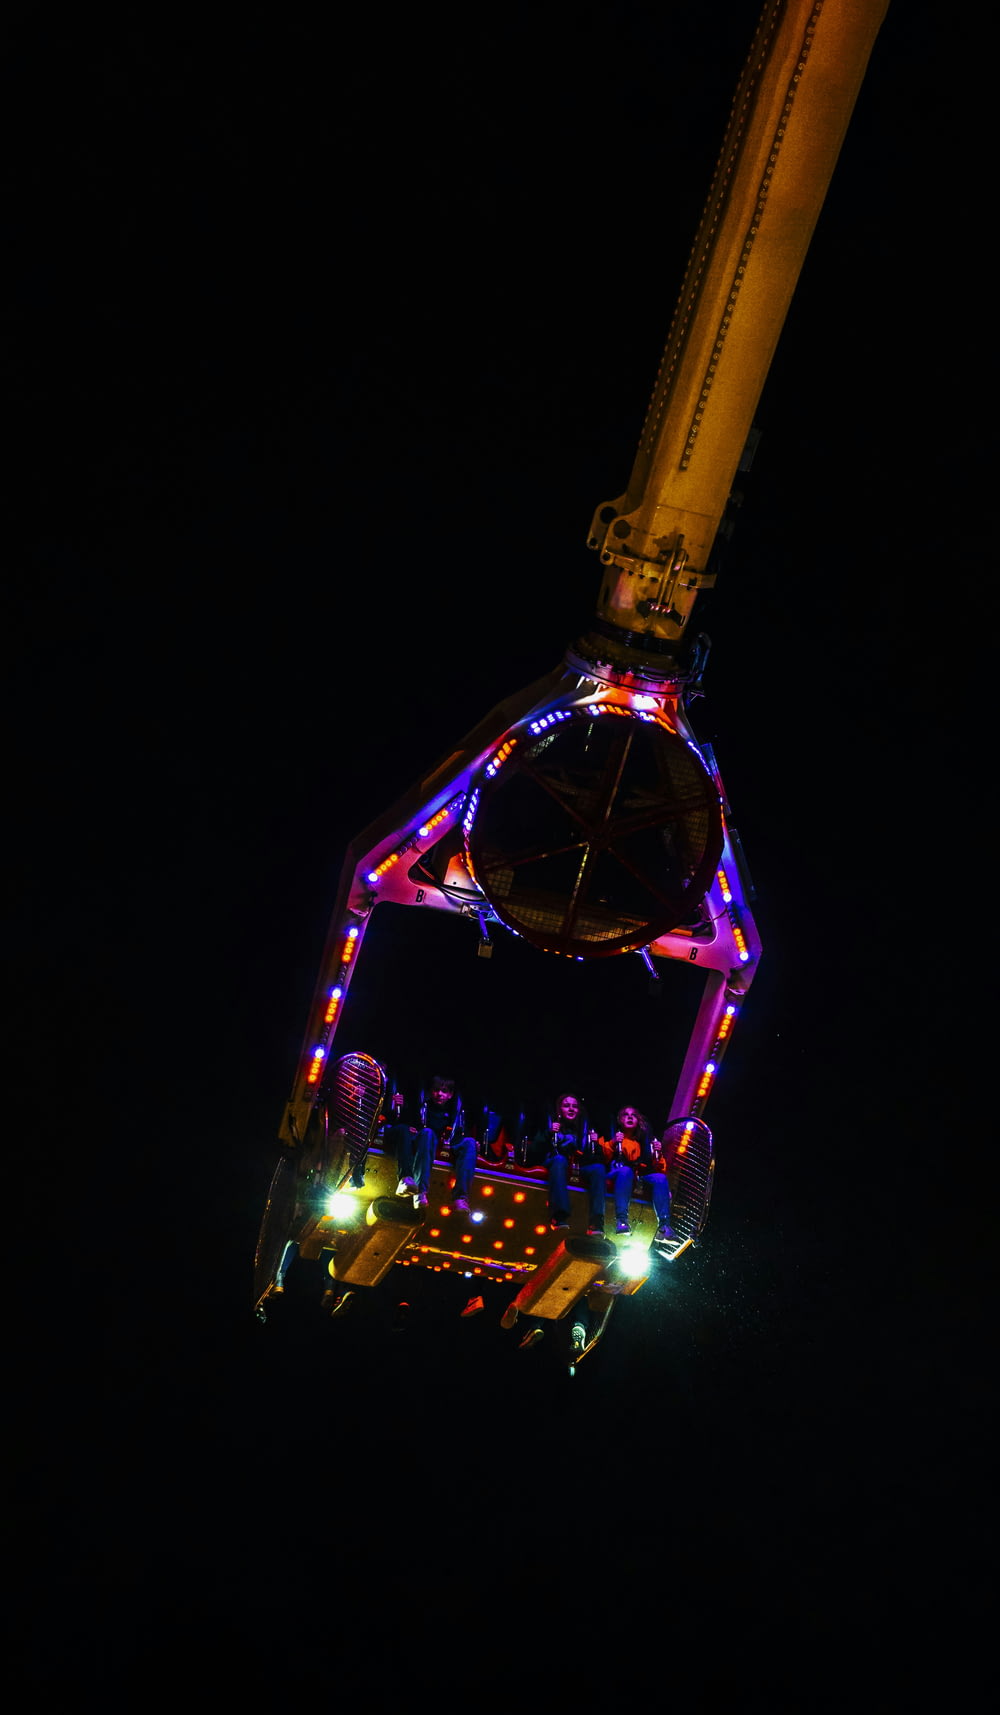 a ferris wheel lit up at night in the dark